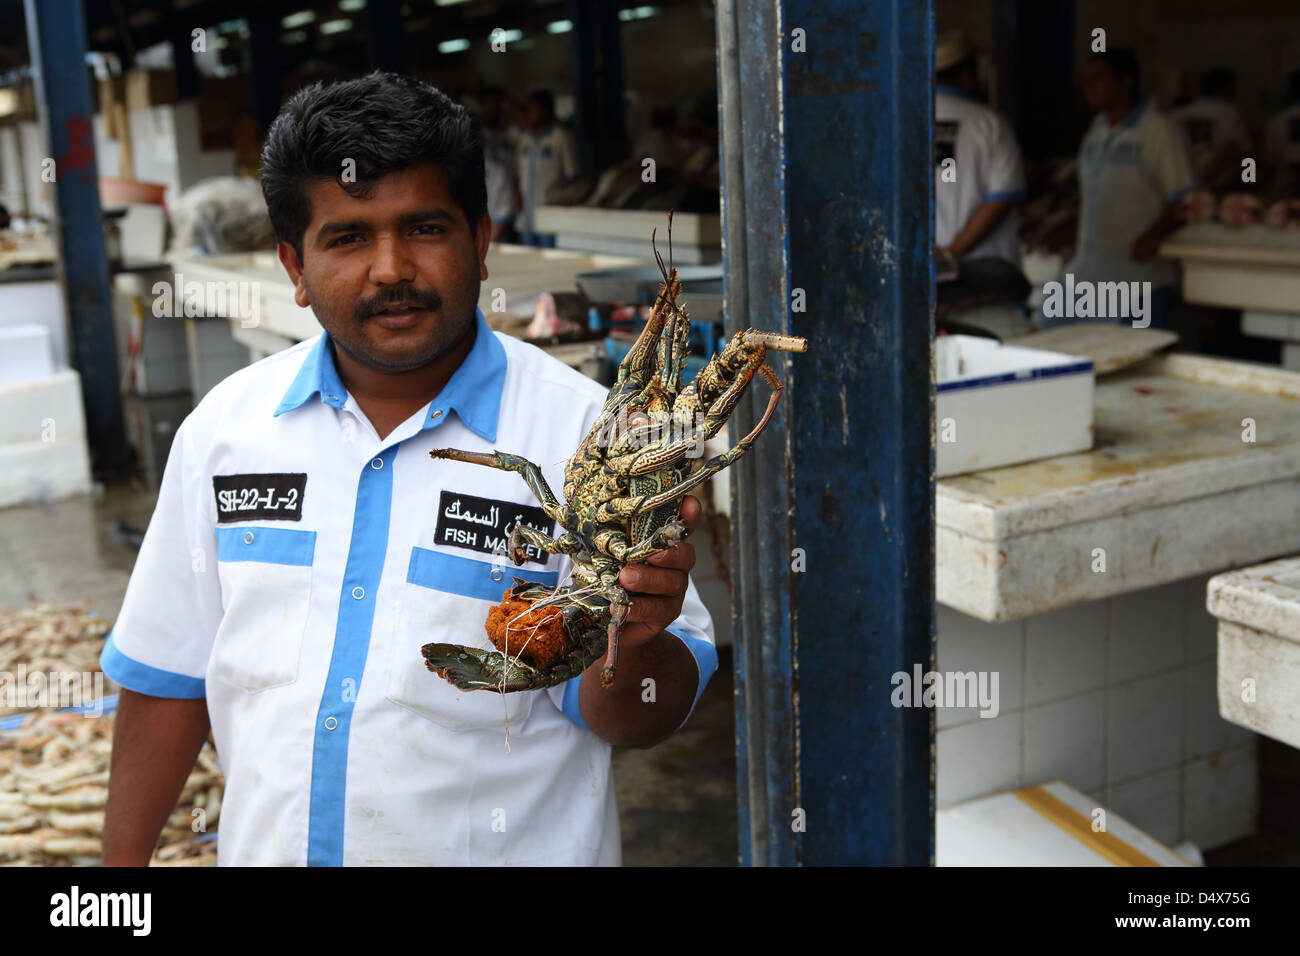 Man holding a lobster at fish market in Dubai, United Arab Emirates Stock Photo